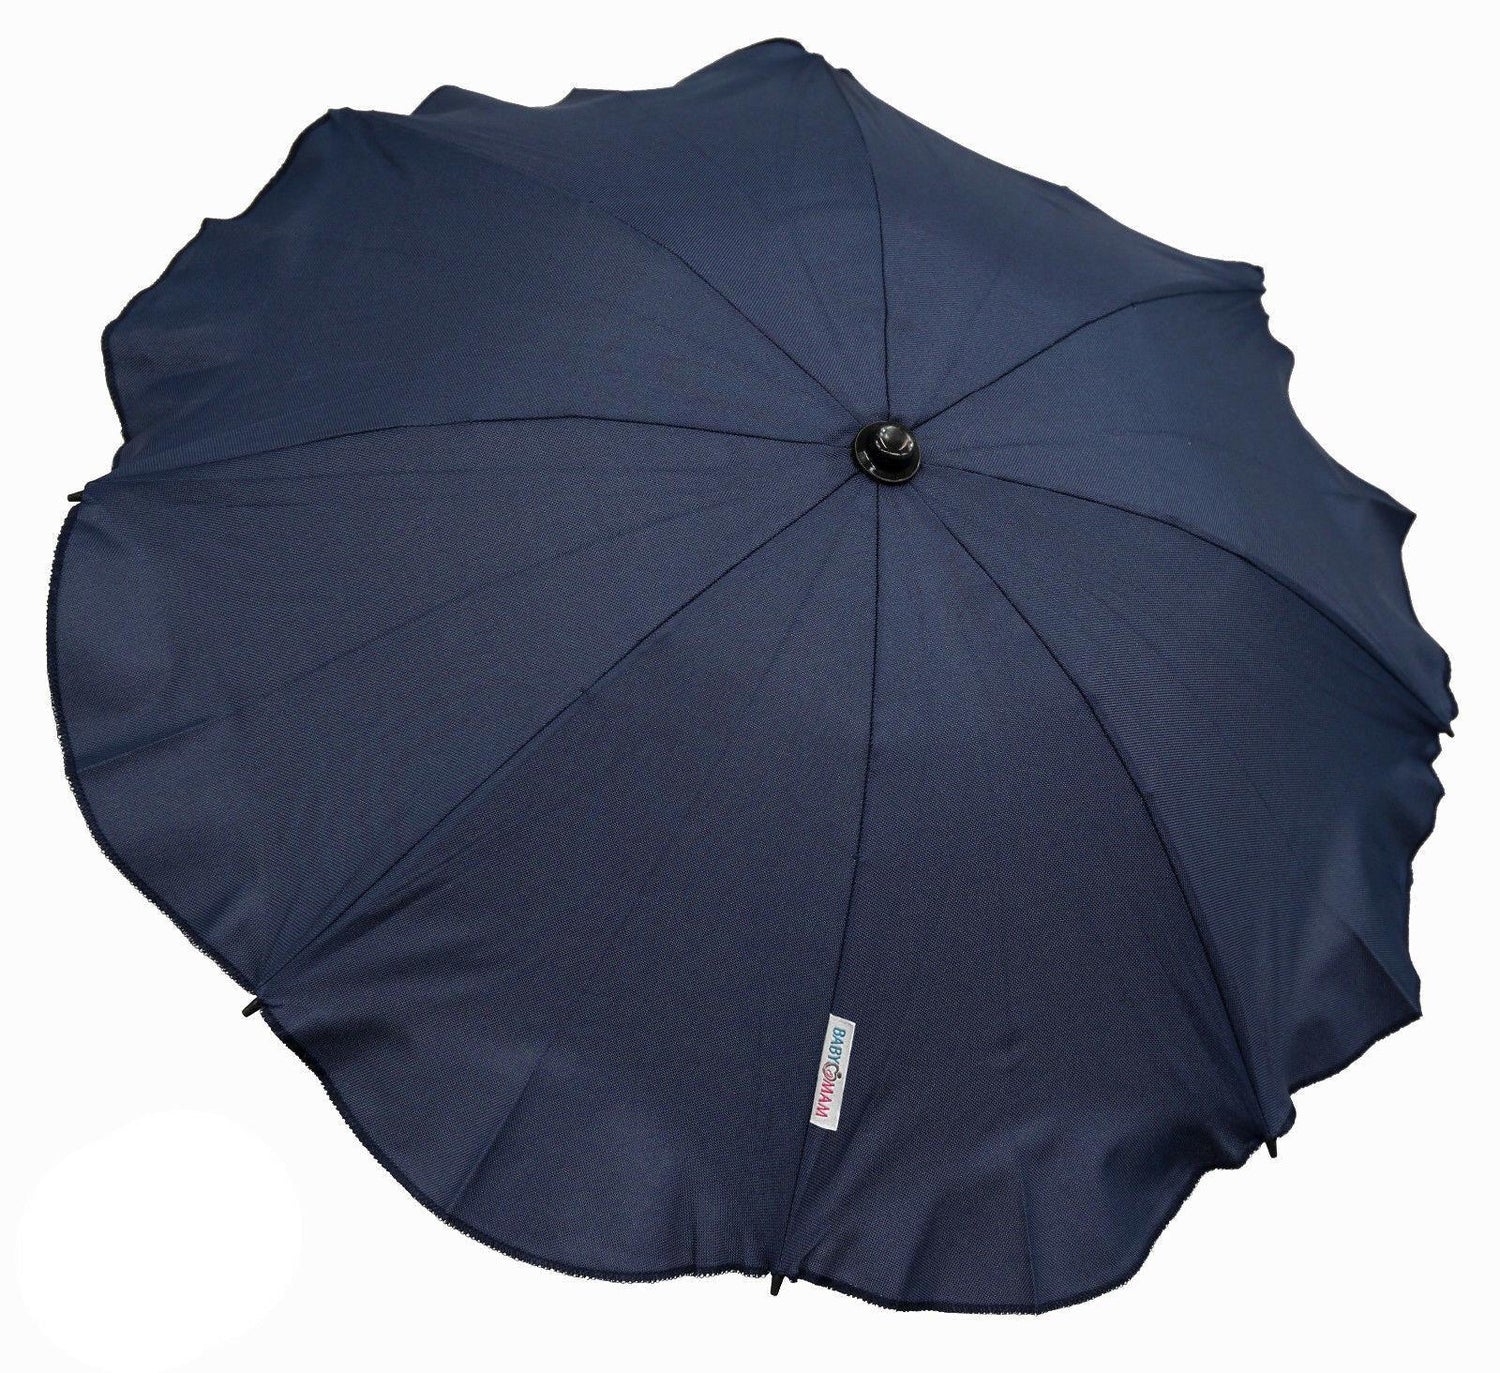 Baby Parasol Universal Sun Umbrella Pram Stroller Canopy Protect From Sun Rain Navy